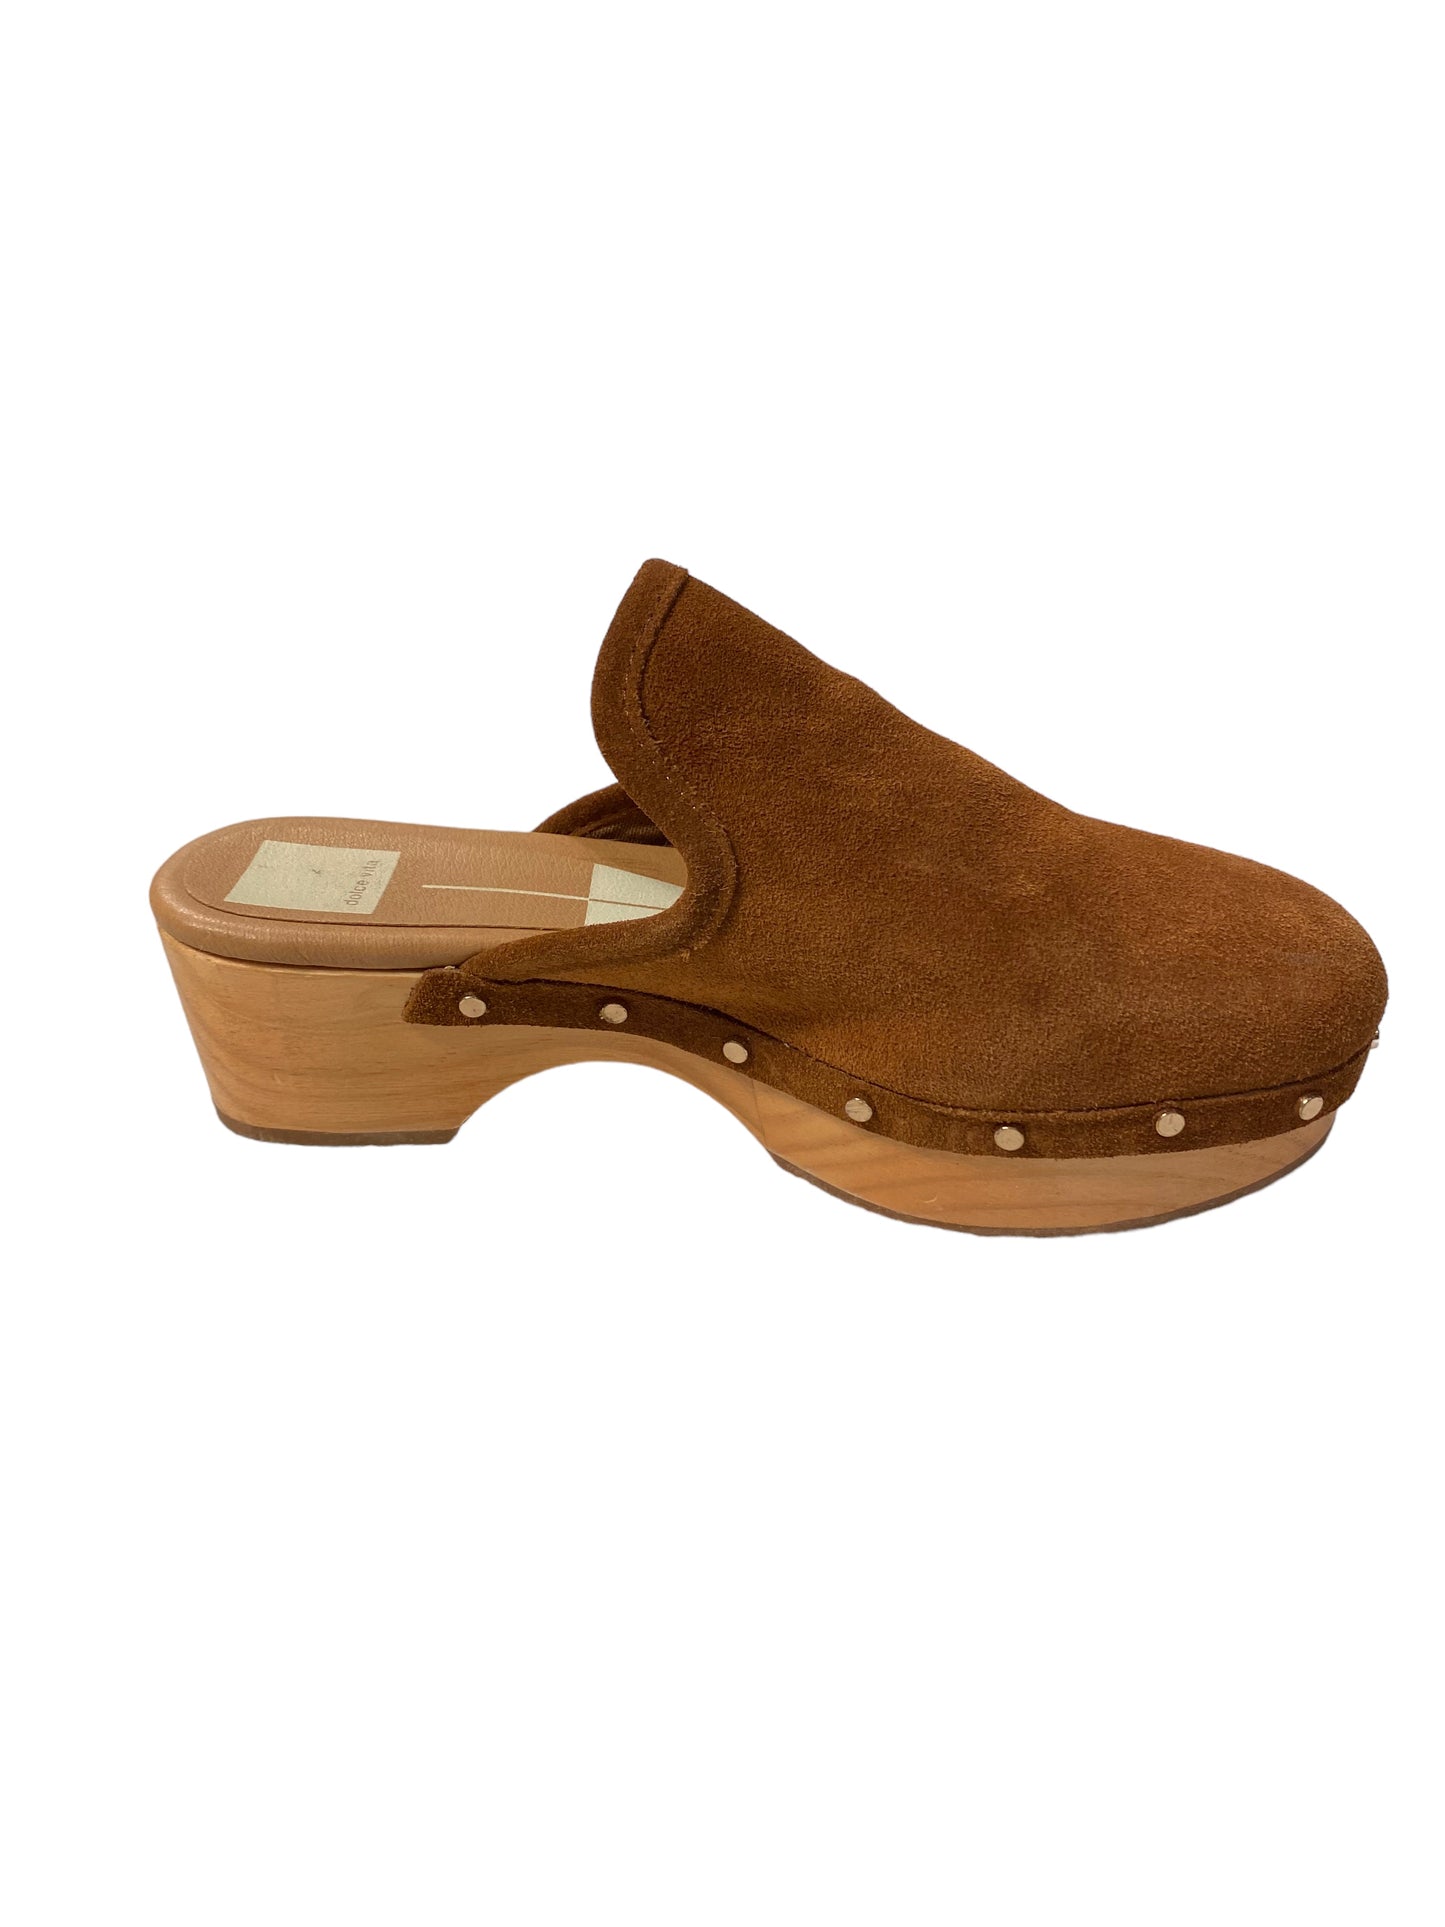 Brown Shoes Heels Block Dolce Vita, Size 7